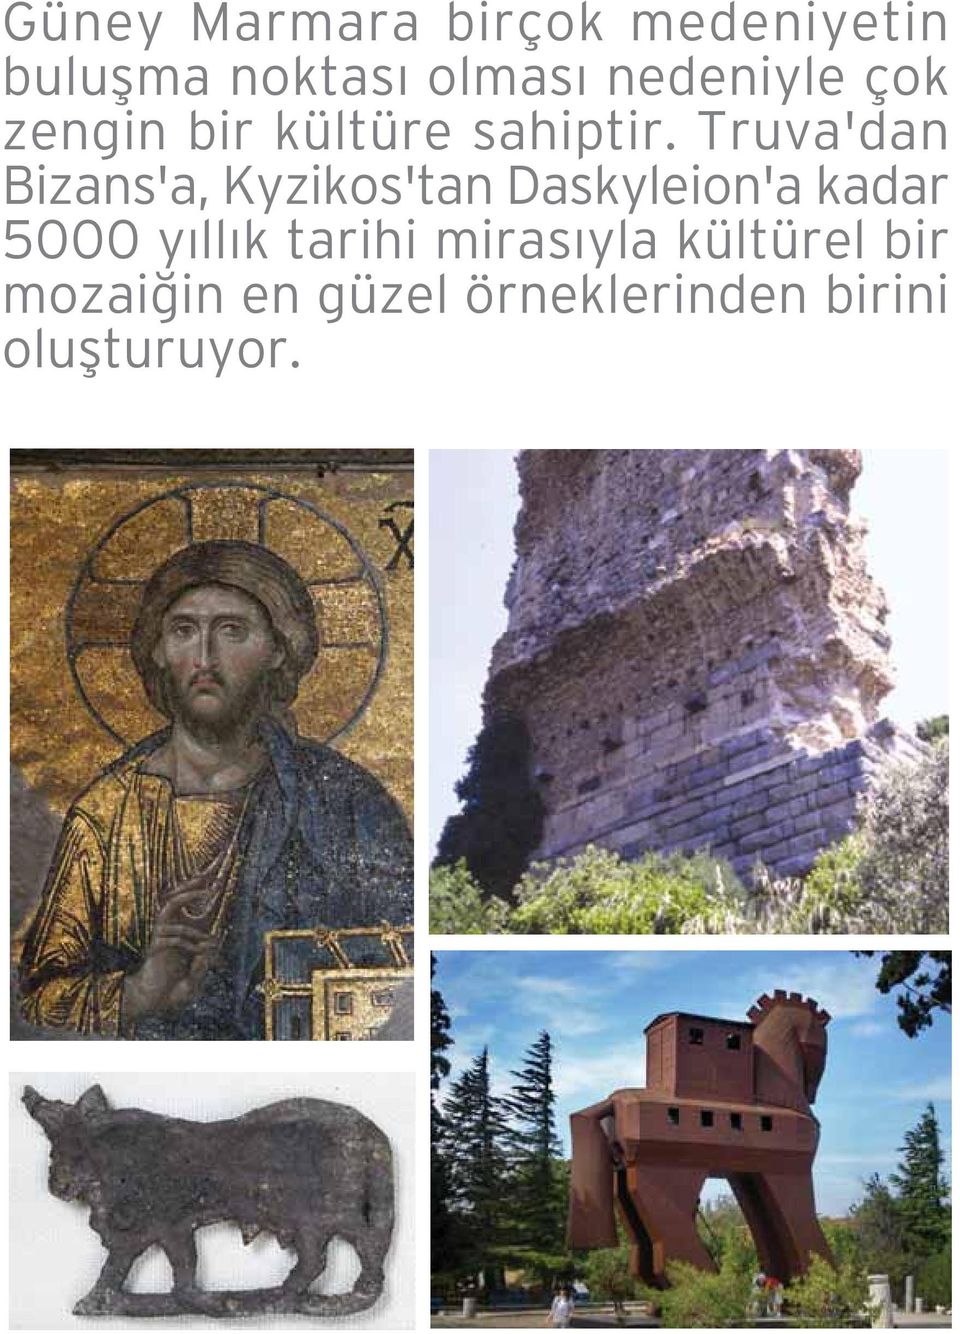 Truva'dan Bizans'a, Kyzikos'tan Daskyleion'a kadar 5000 y ll